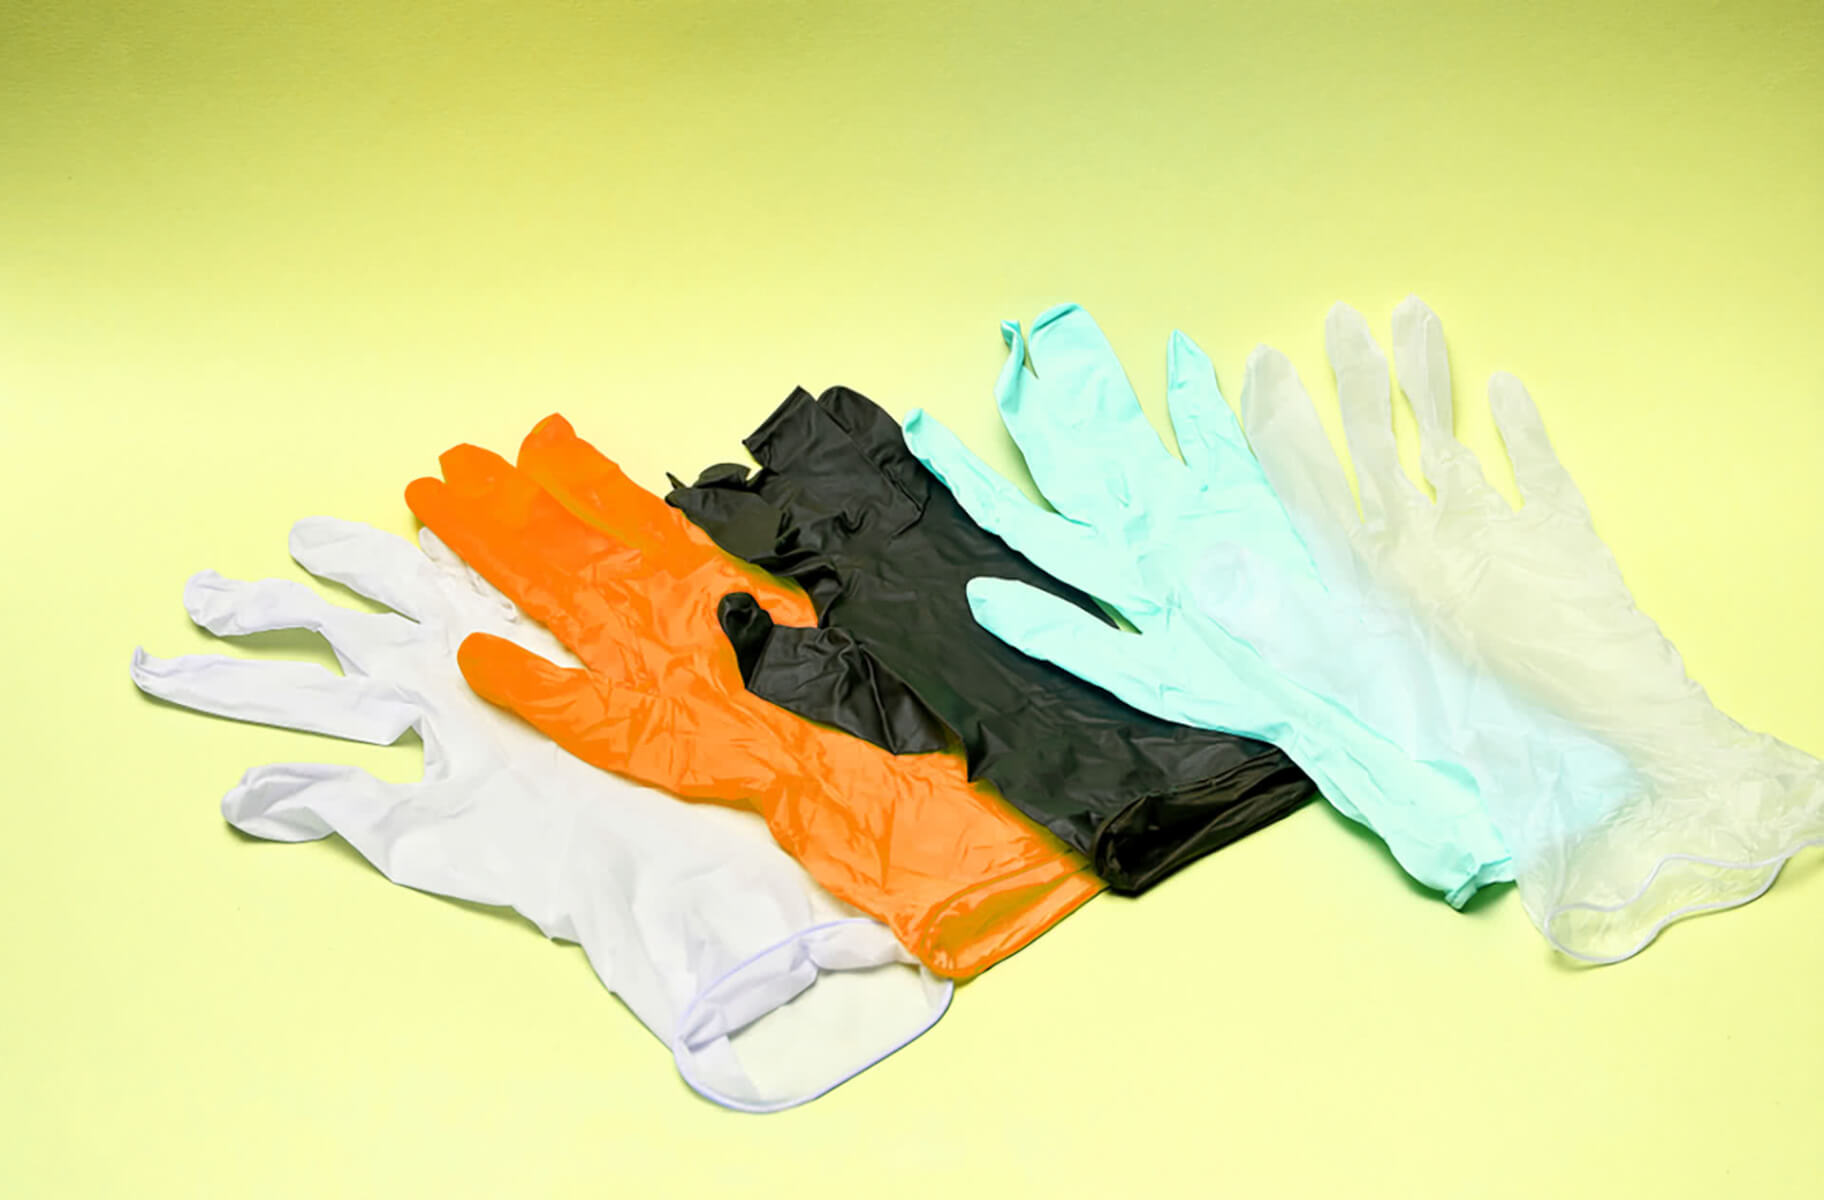 Aurelia Gloves Canada Differents Gloves Full